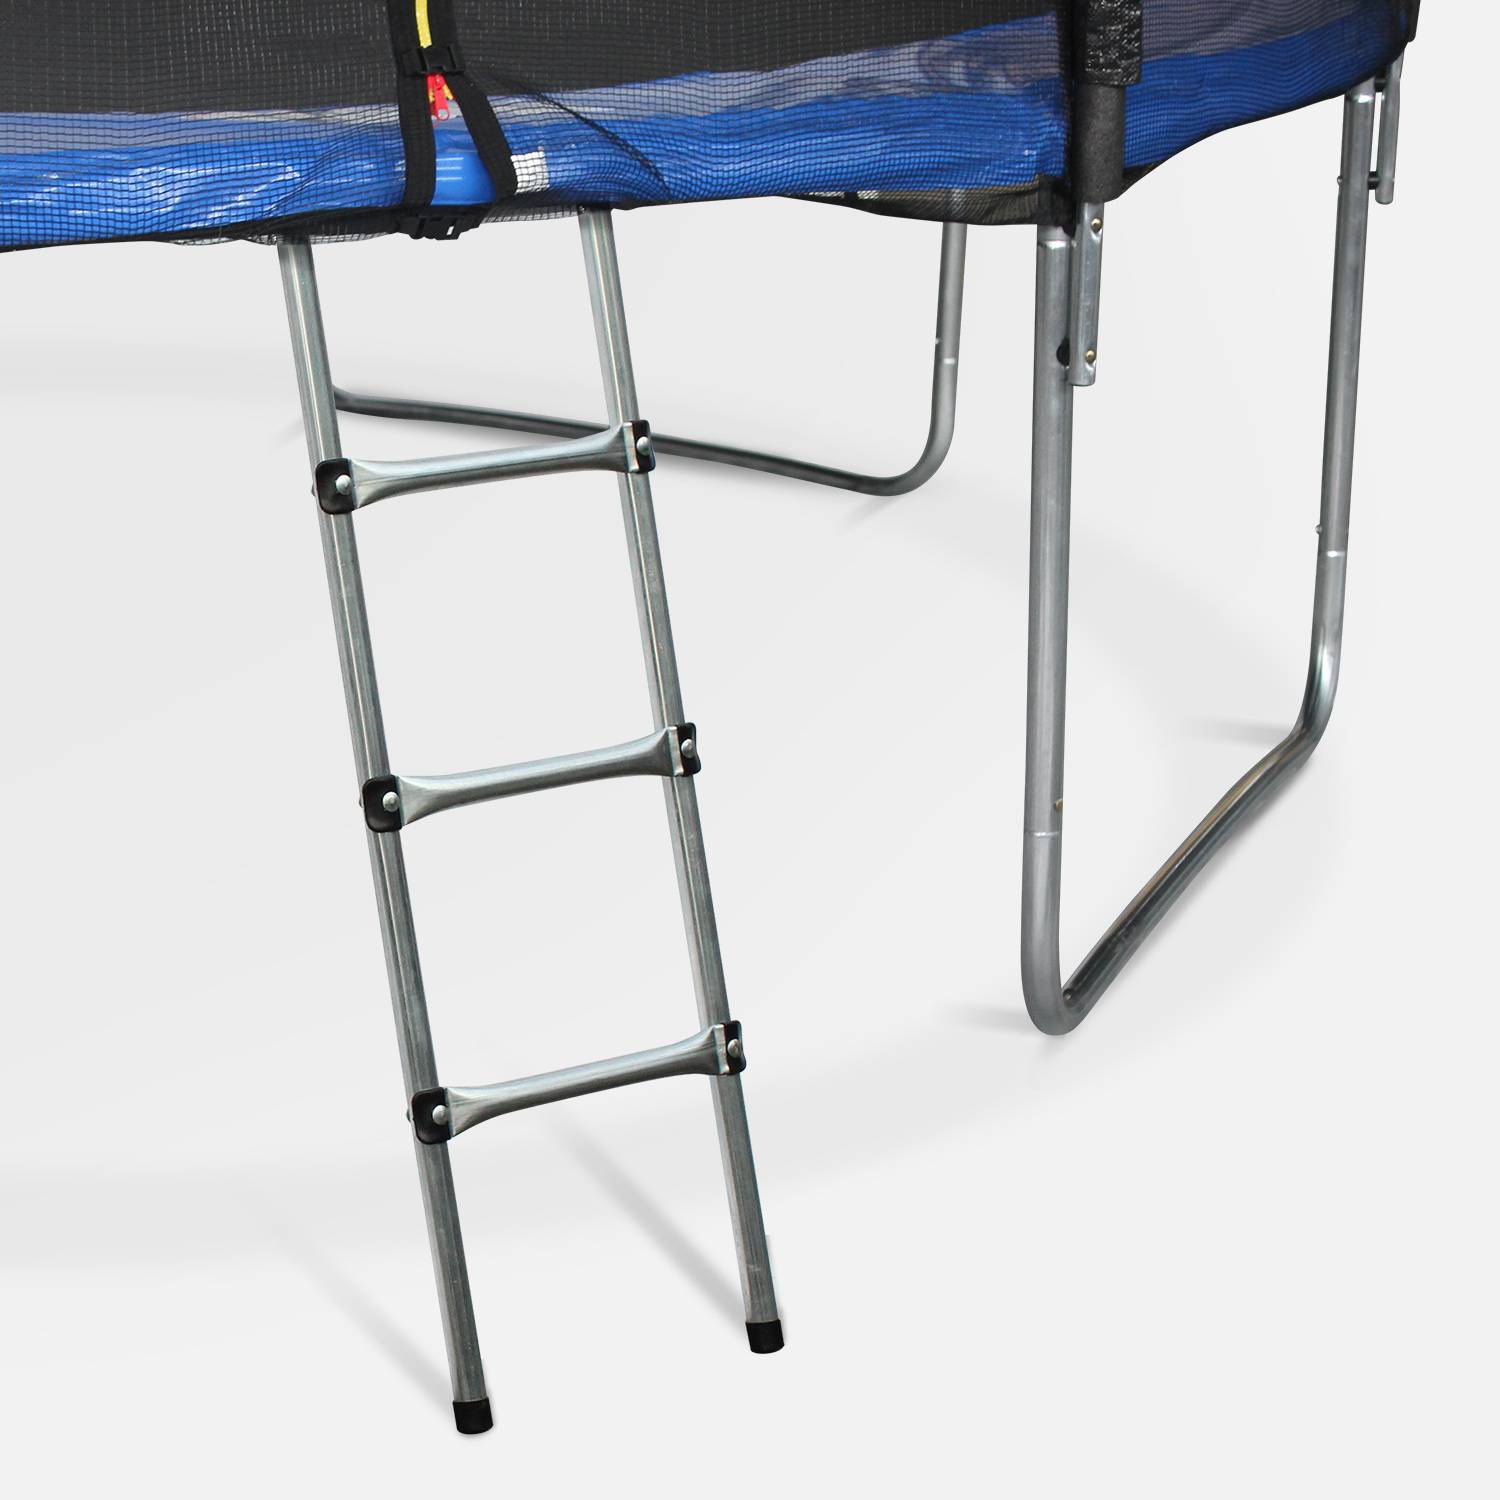 Trampoline Accessories Pack - Ø460 cm - Ladder, Rain Cover, Shoe Net, Anchor Kit Photo2